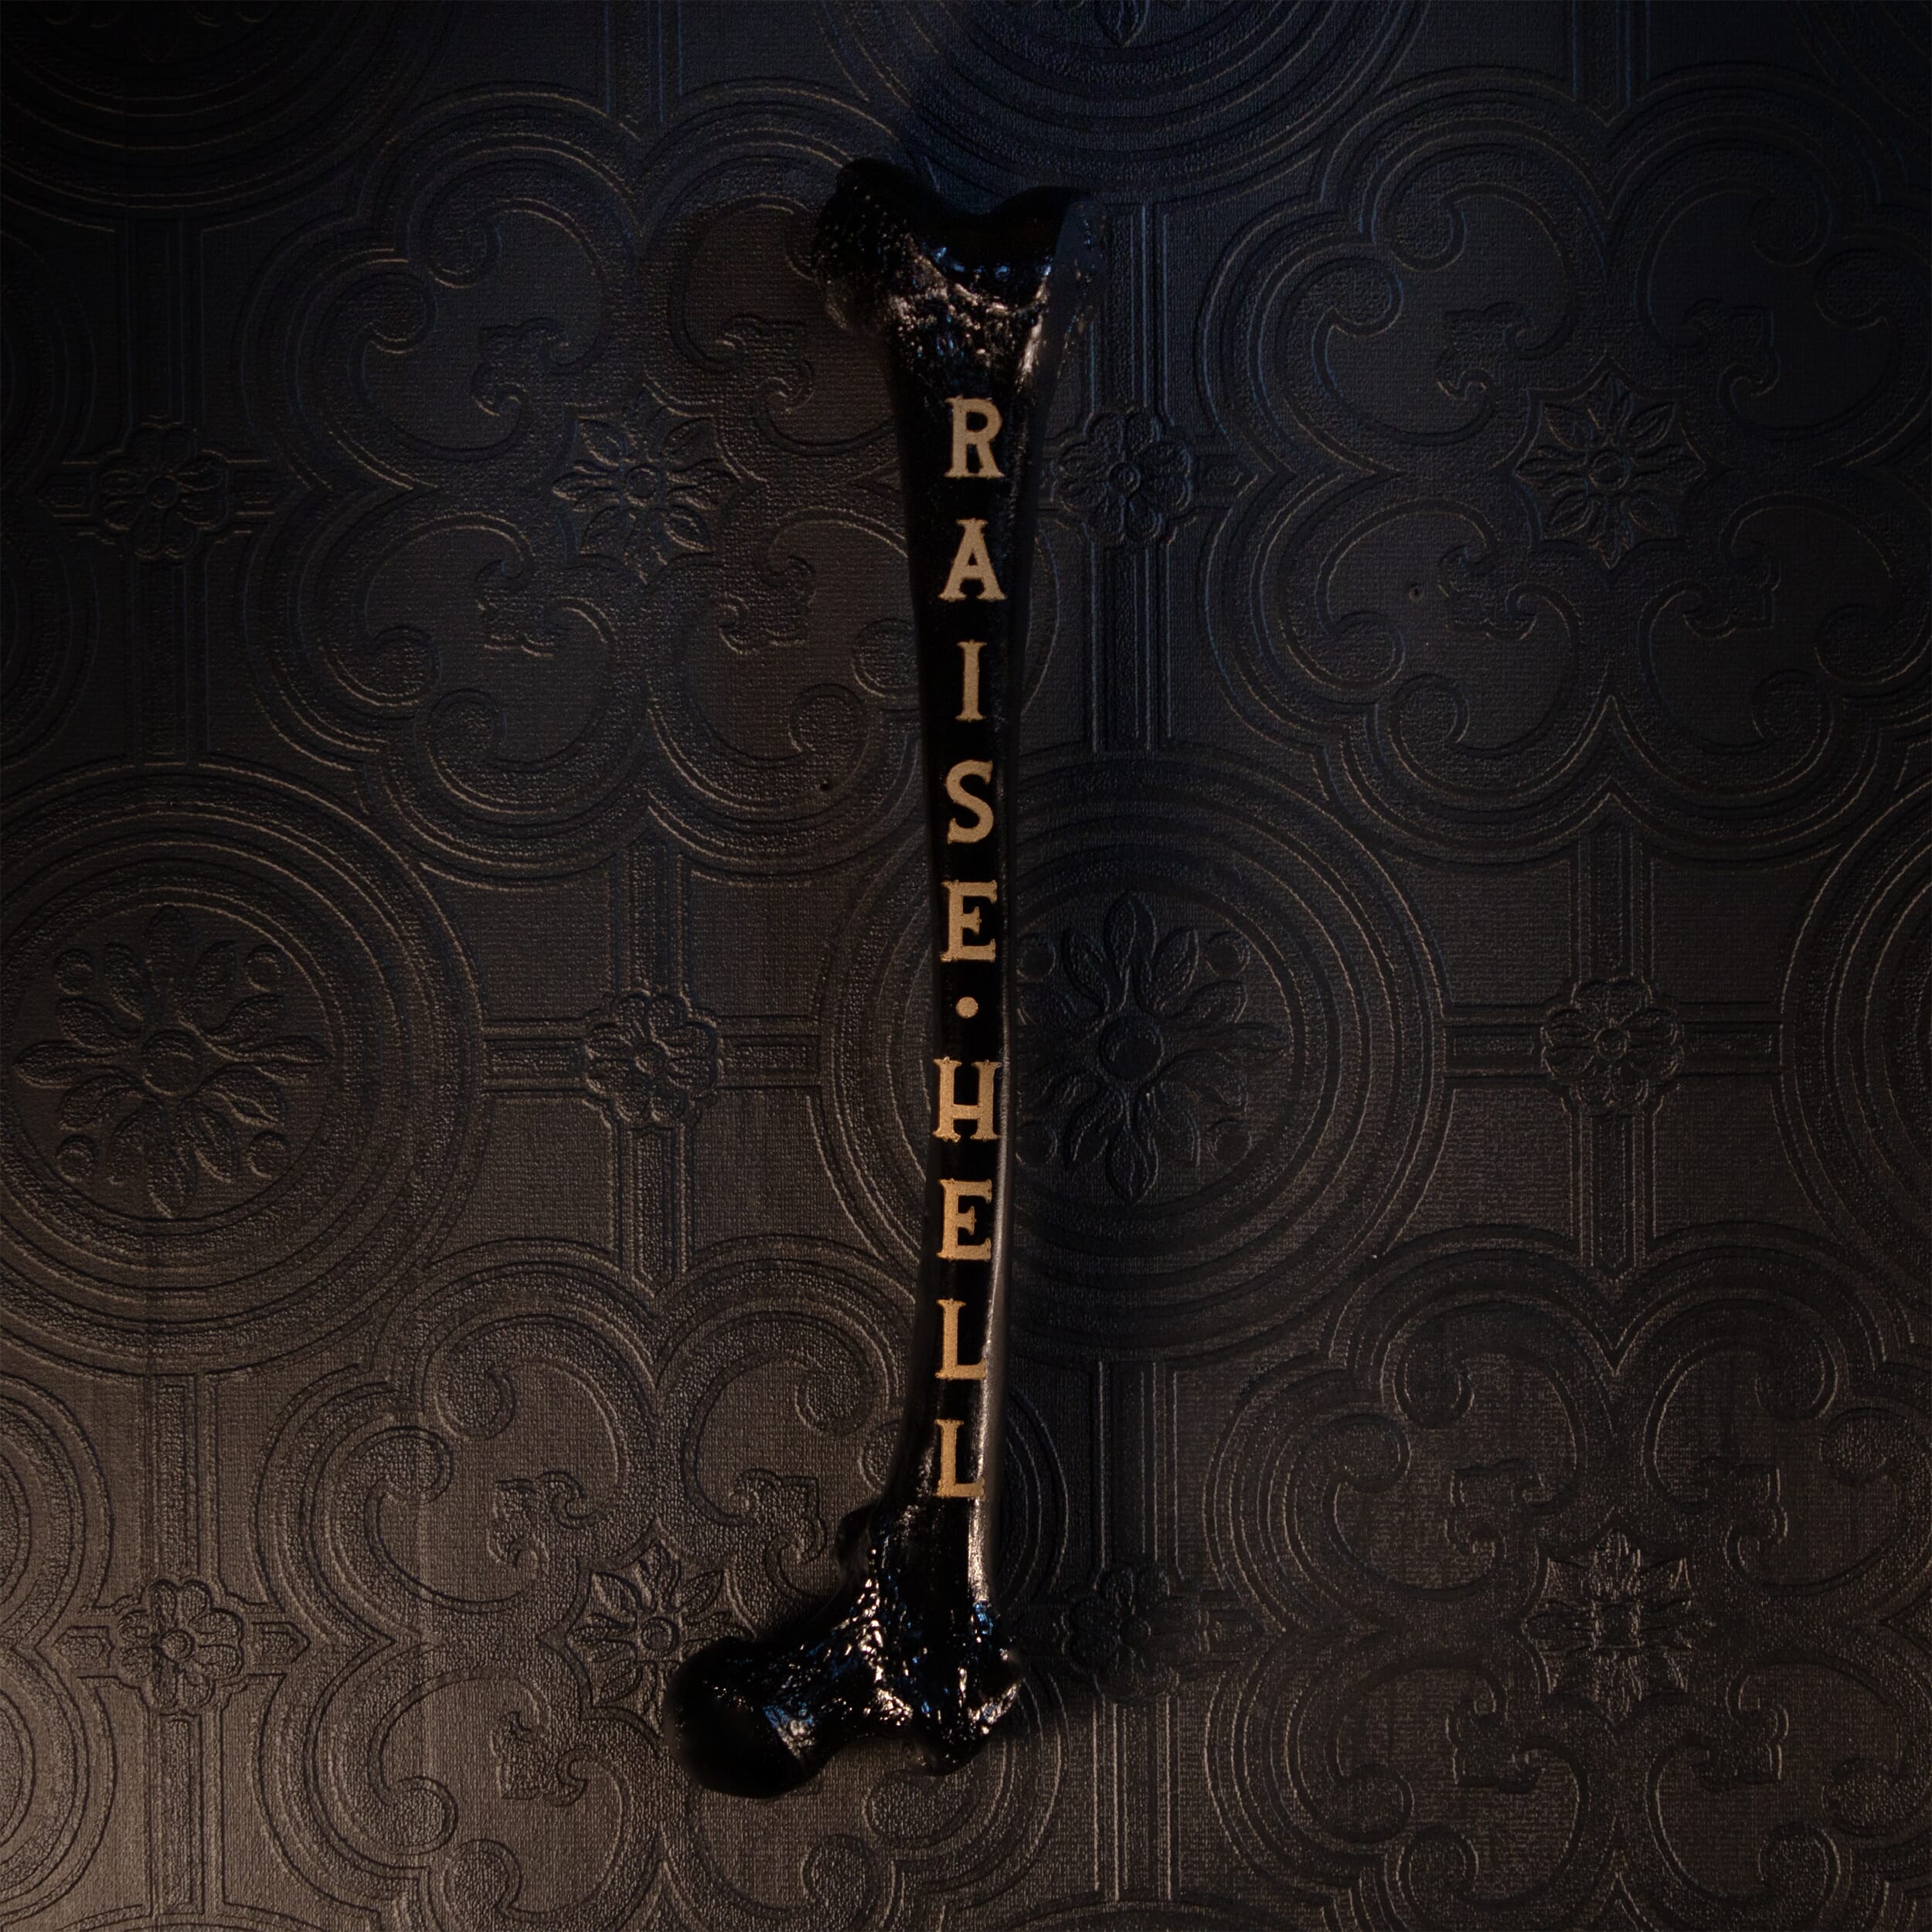 Raise hell - Engraved Femur bone - The Blackened teeth - gothic decor